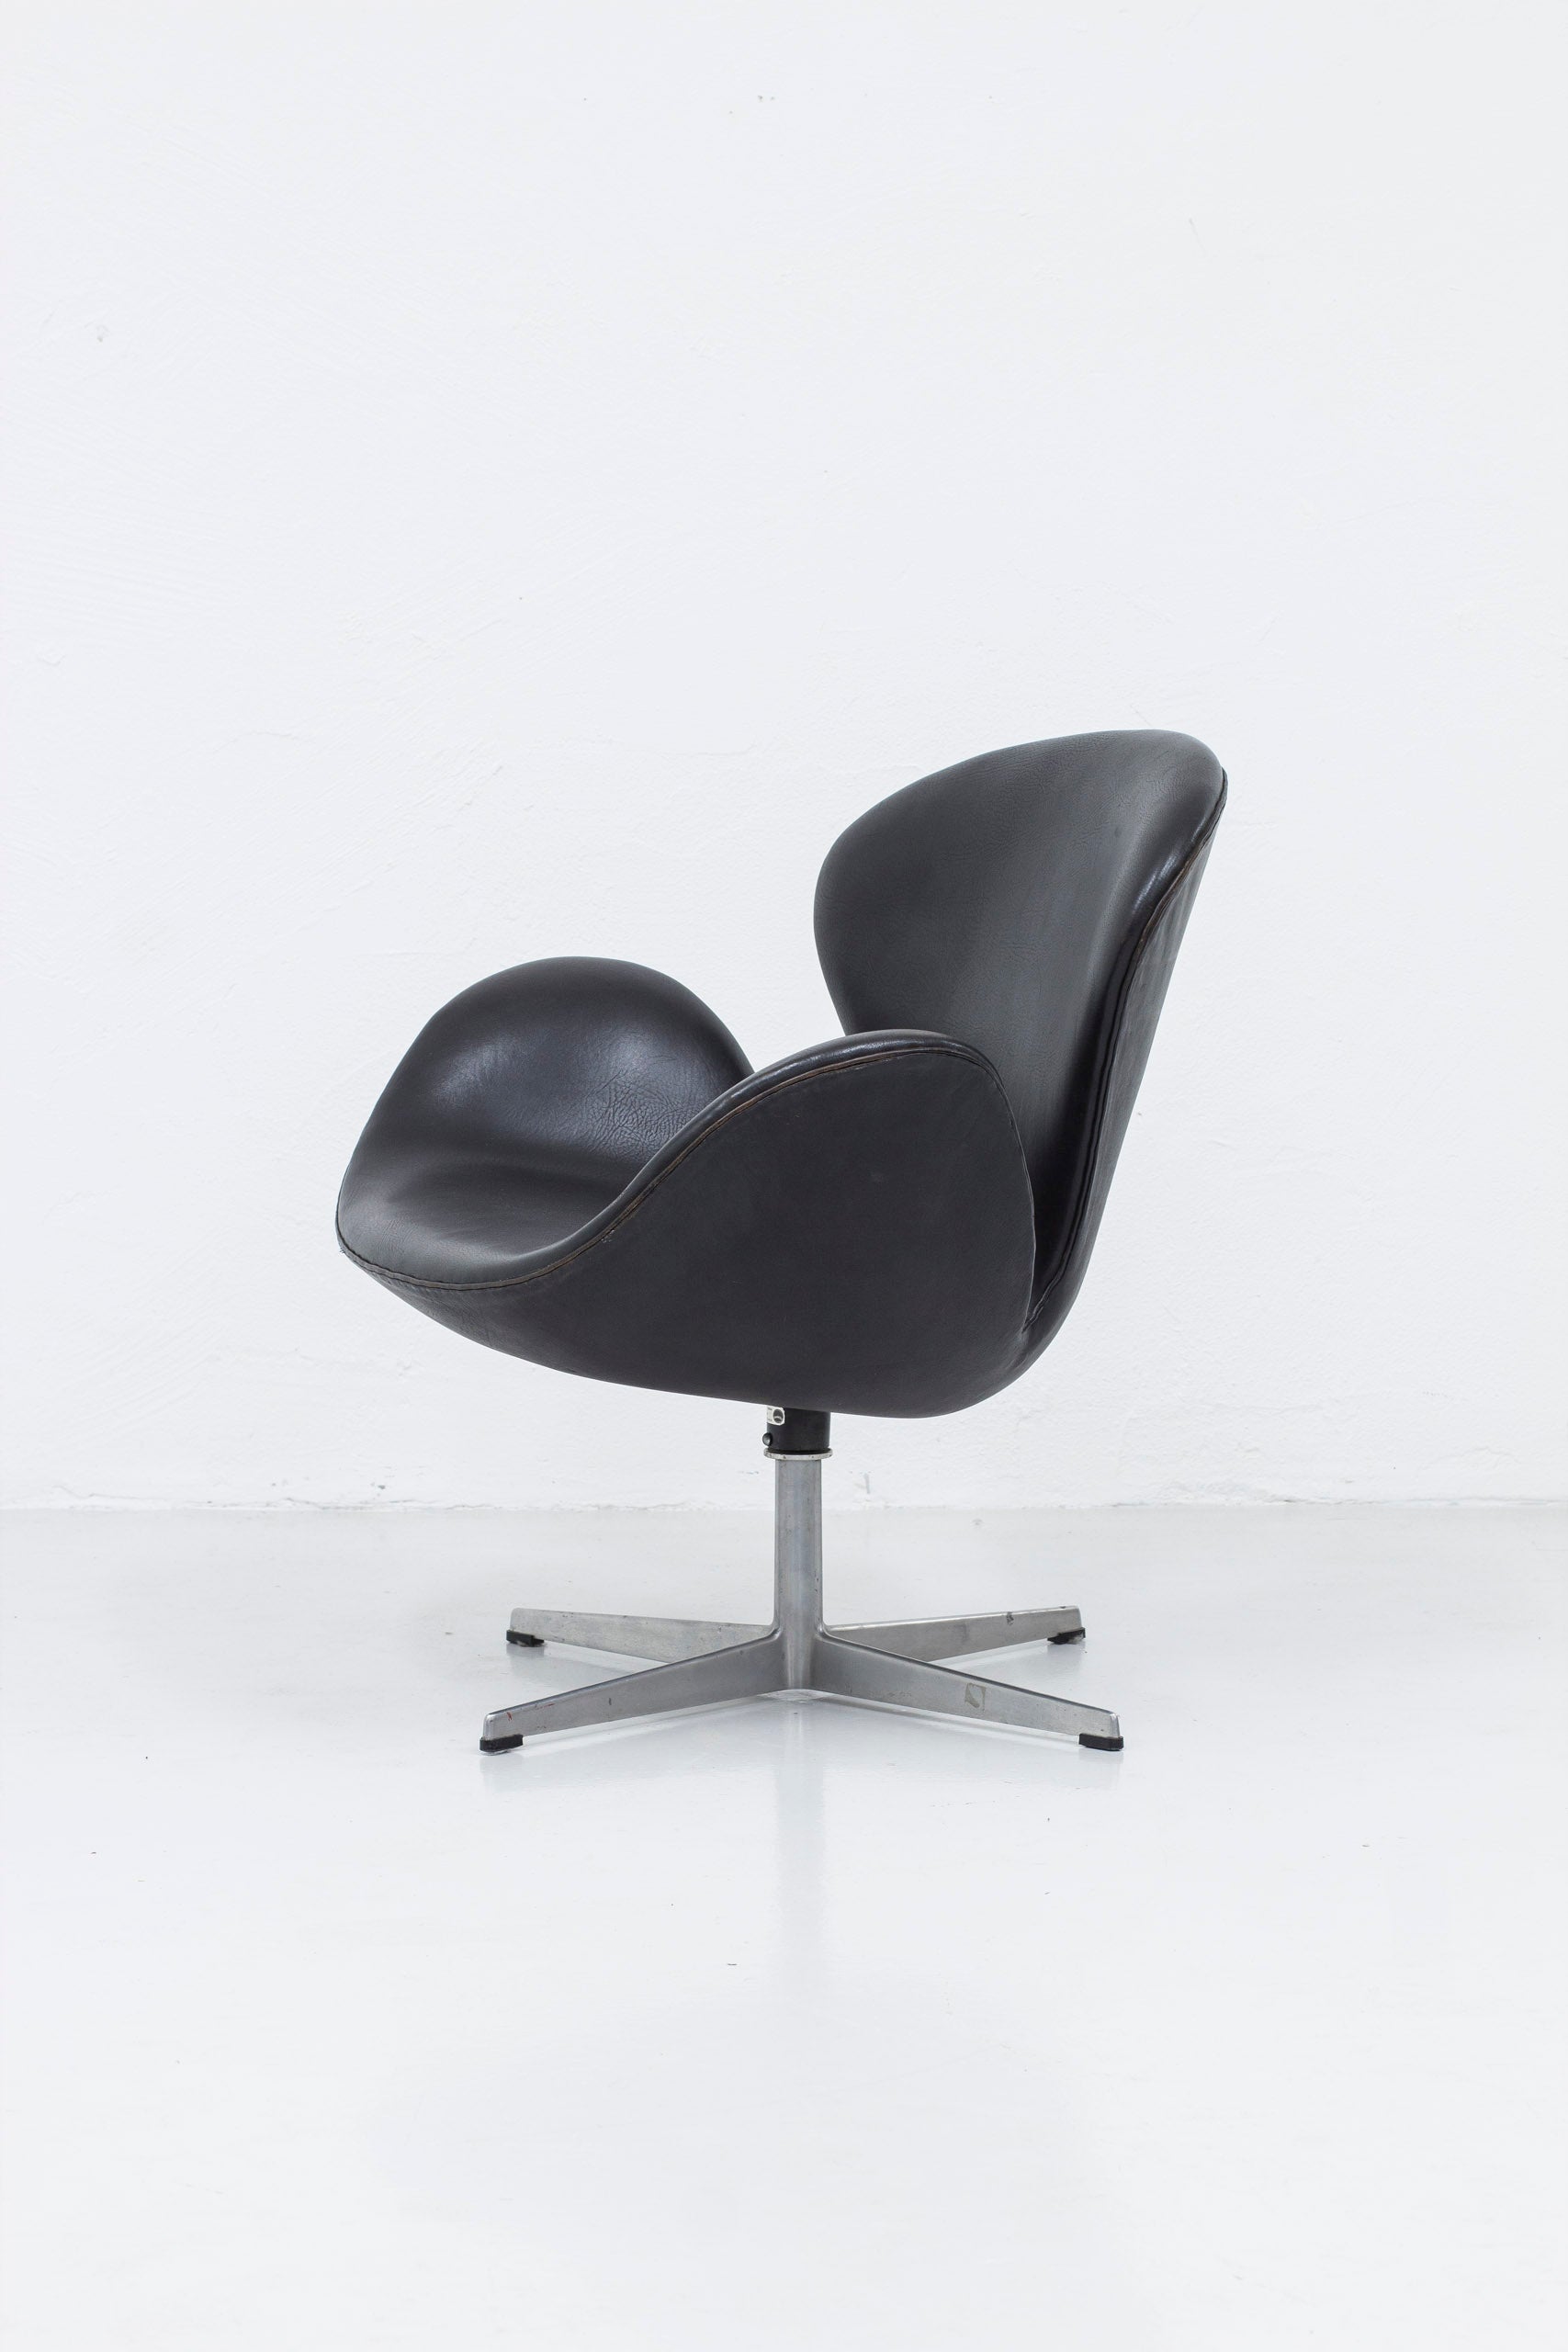 "Swan" chair by Arne Jacobsen